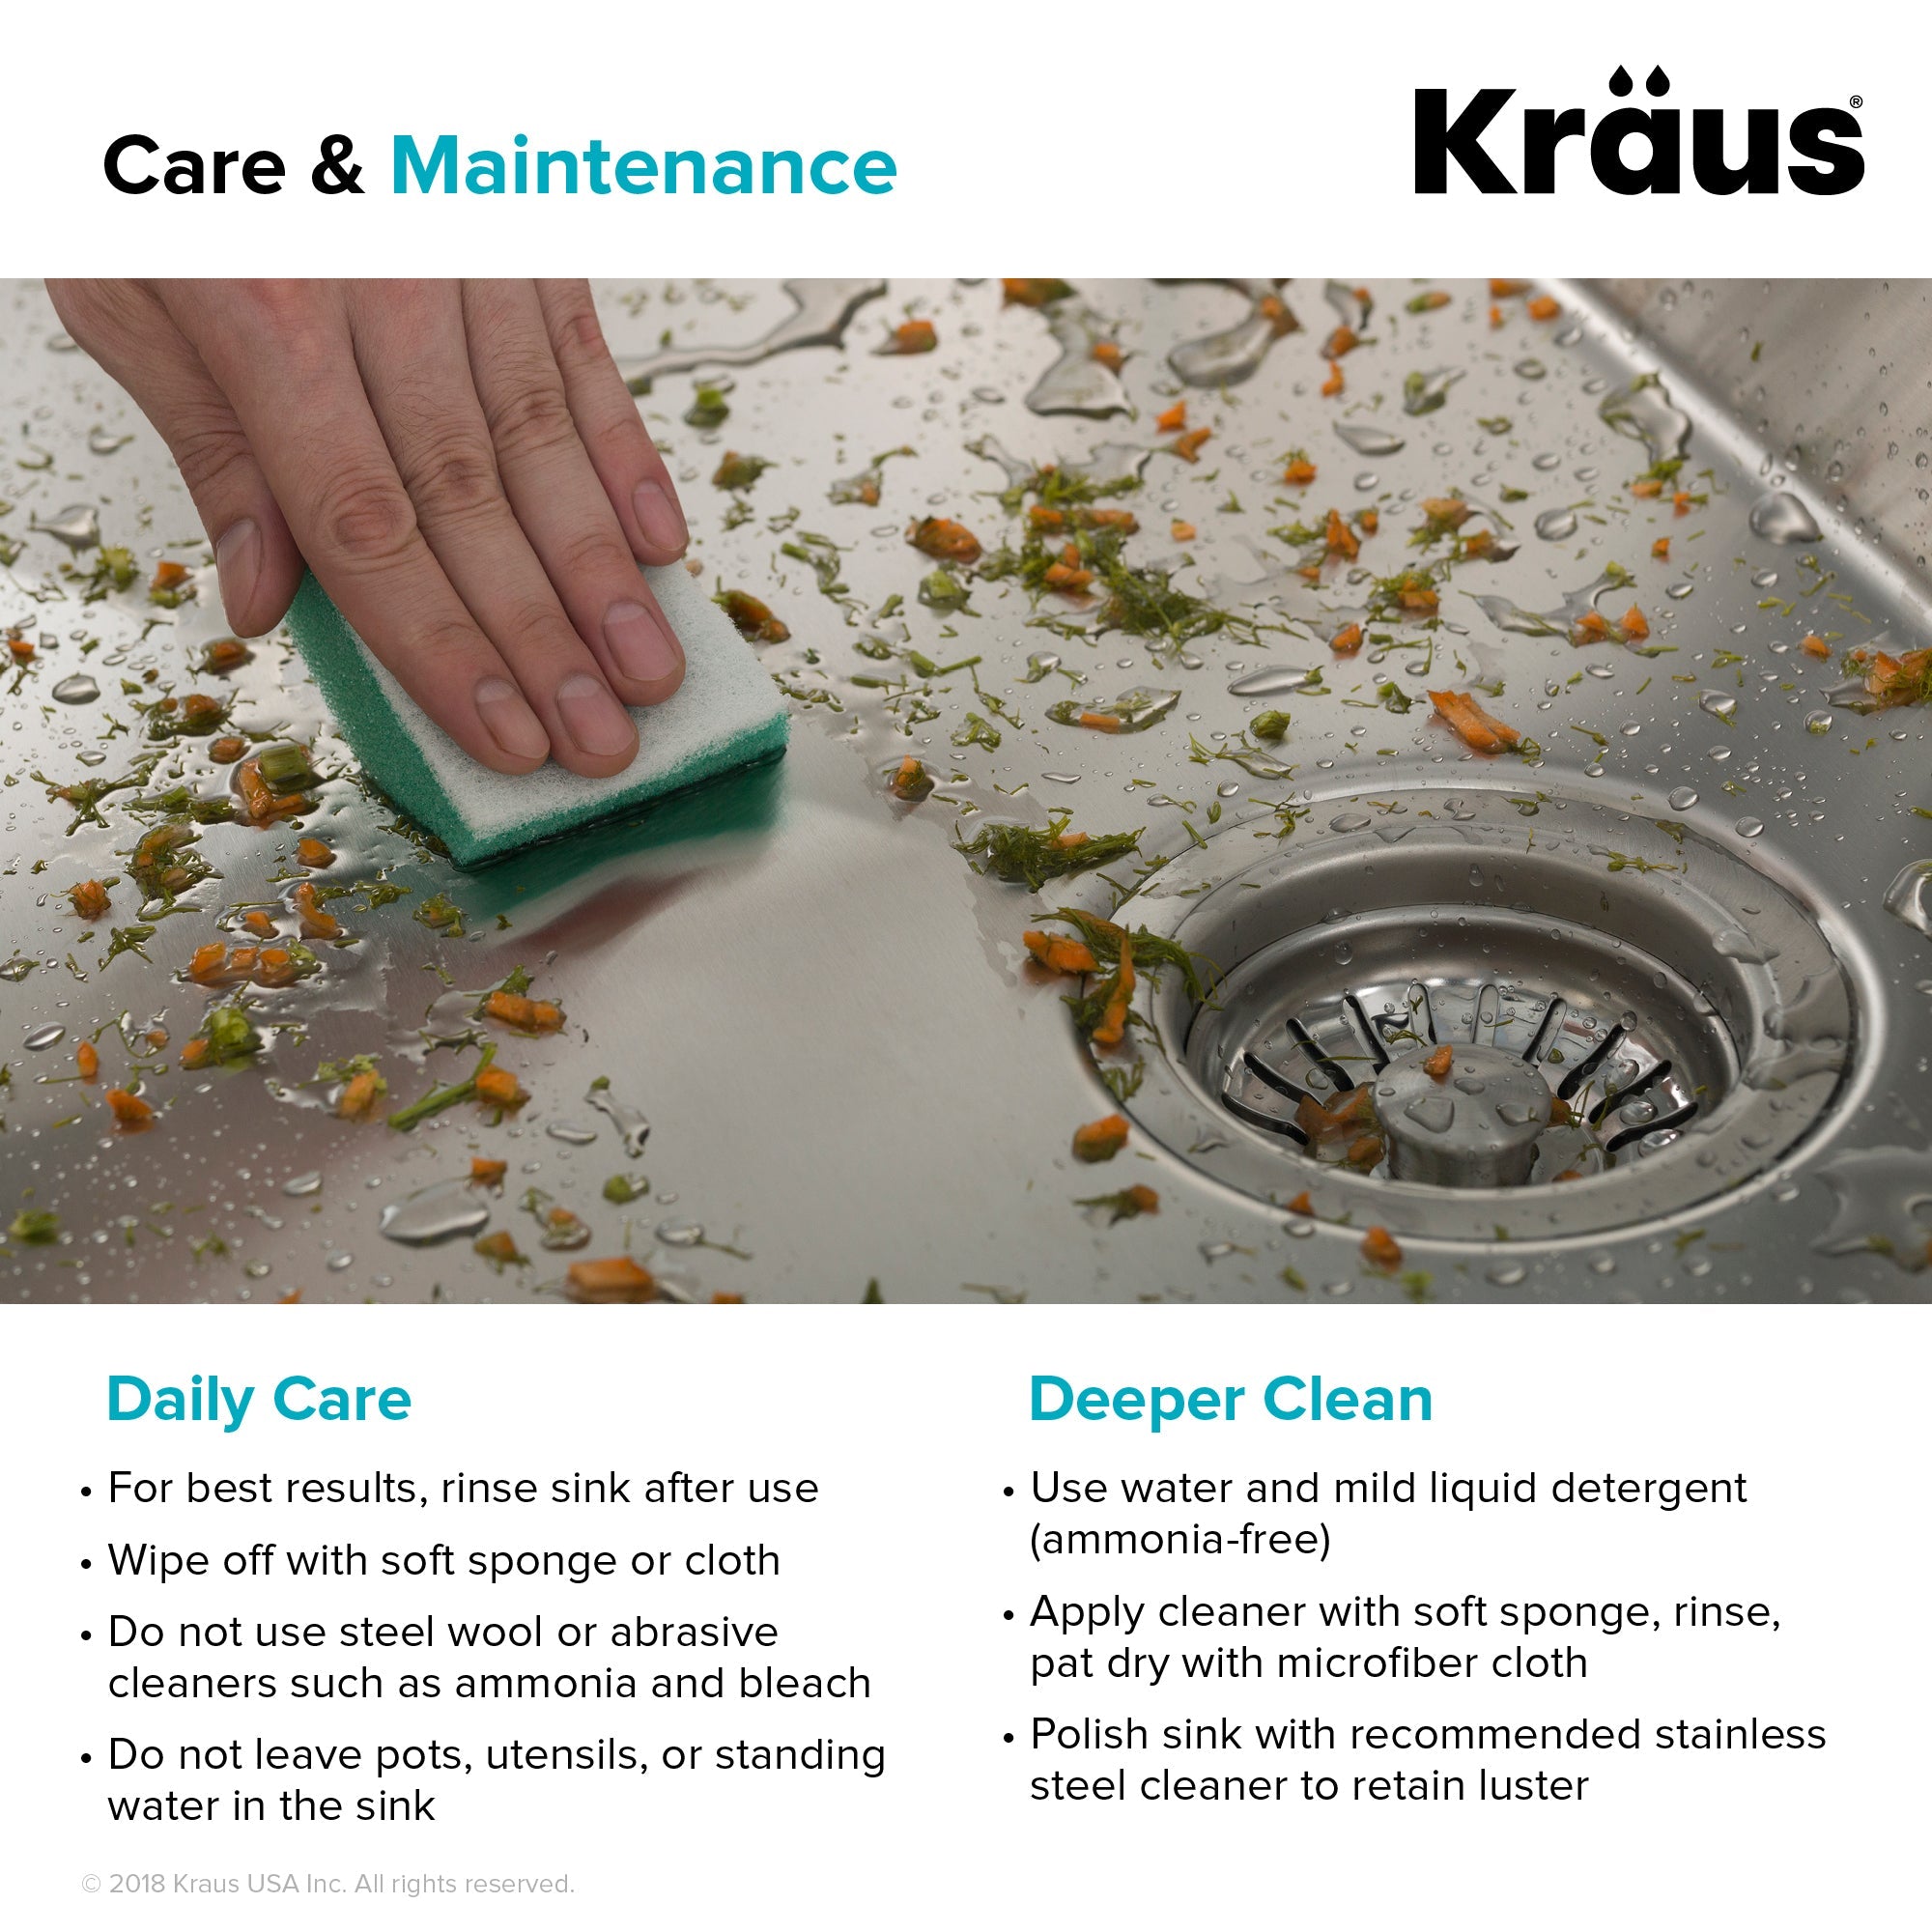 KRAUS 33 x 22 inch Standart PRO Drop-In 16 Gauge Double Bowl 2-Hole Stainless Steel Kitchen Sink-Kitchen & Utility Sinks-DirectSinks